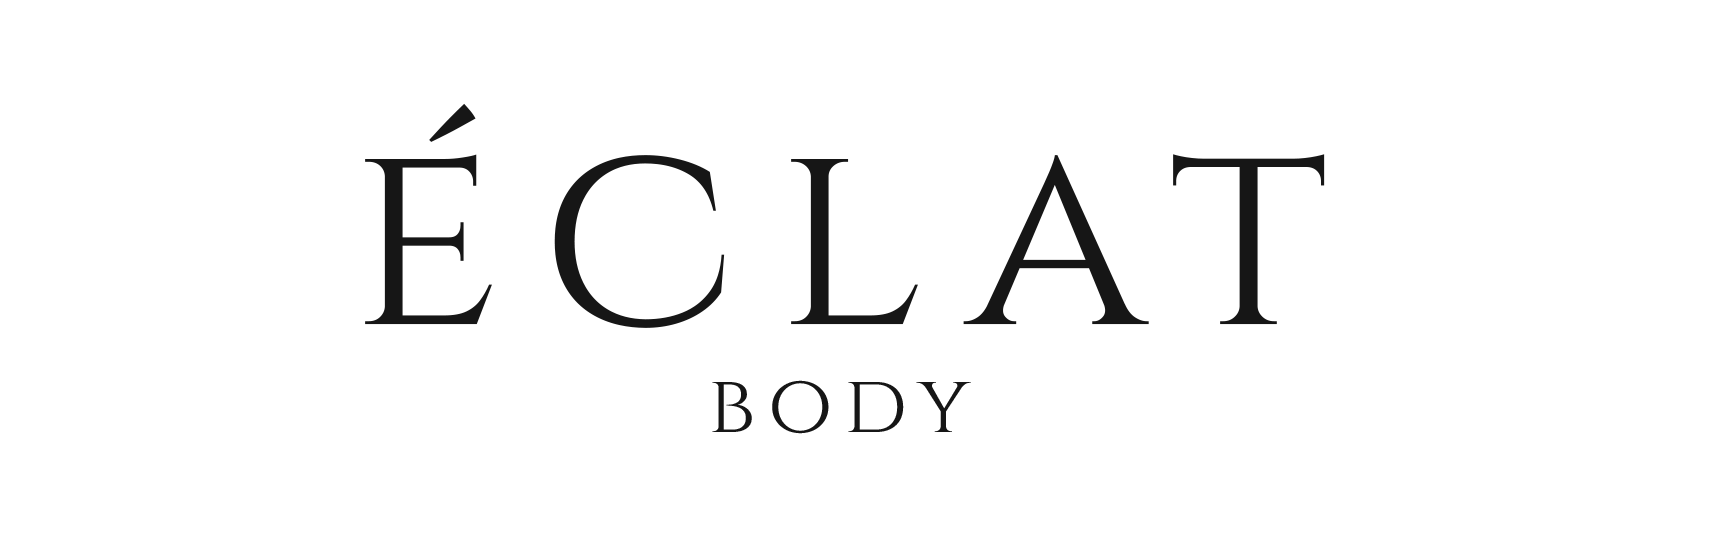 eclat body lab body enhancement shop logo for enhancement beauty products